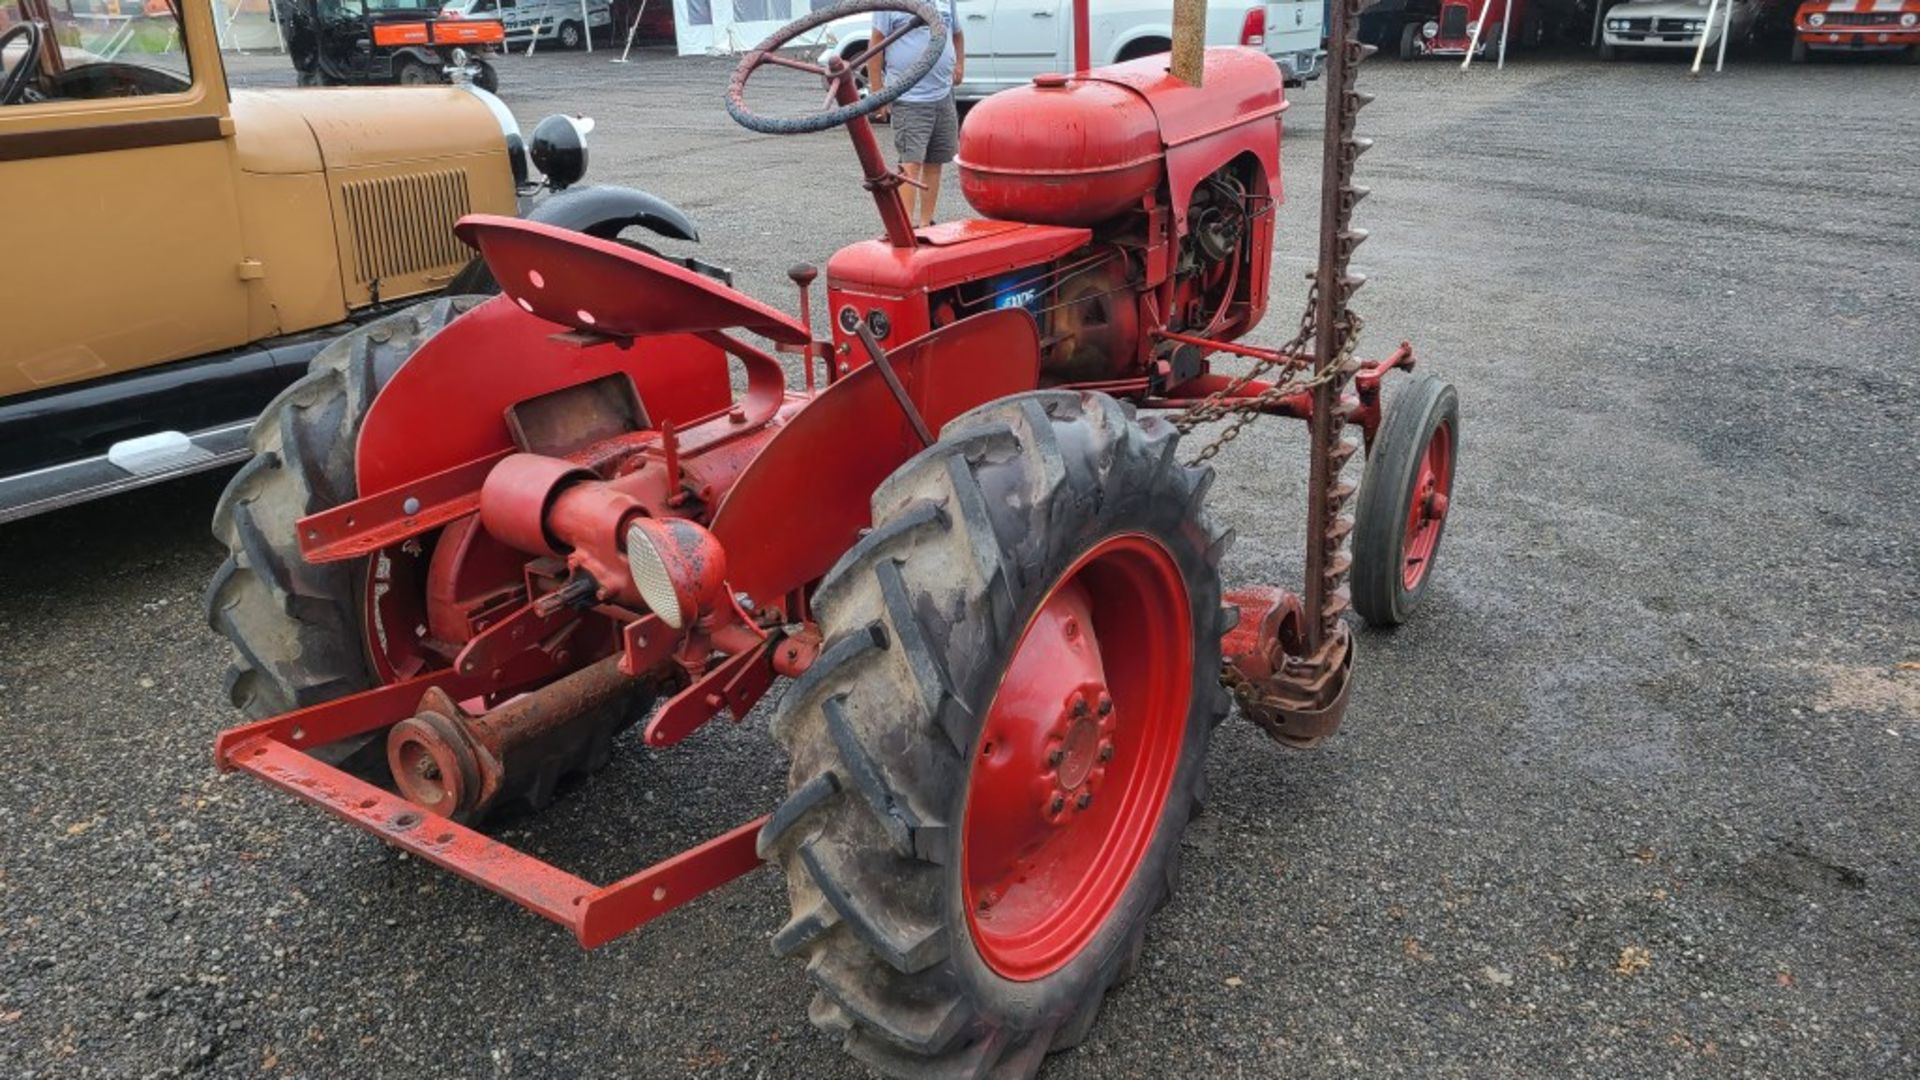 1953 Massey Fergsuon Antique Tractor - Image 3 of 4